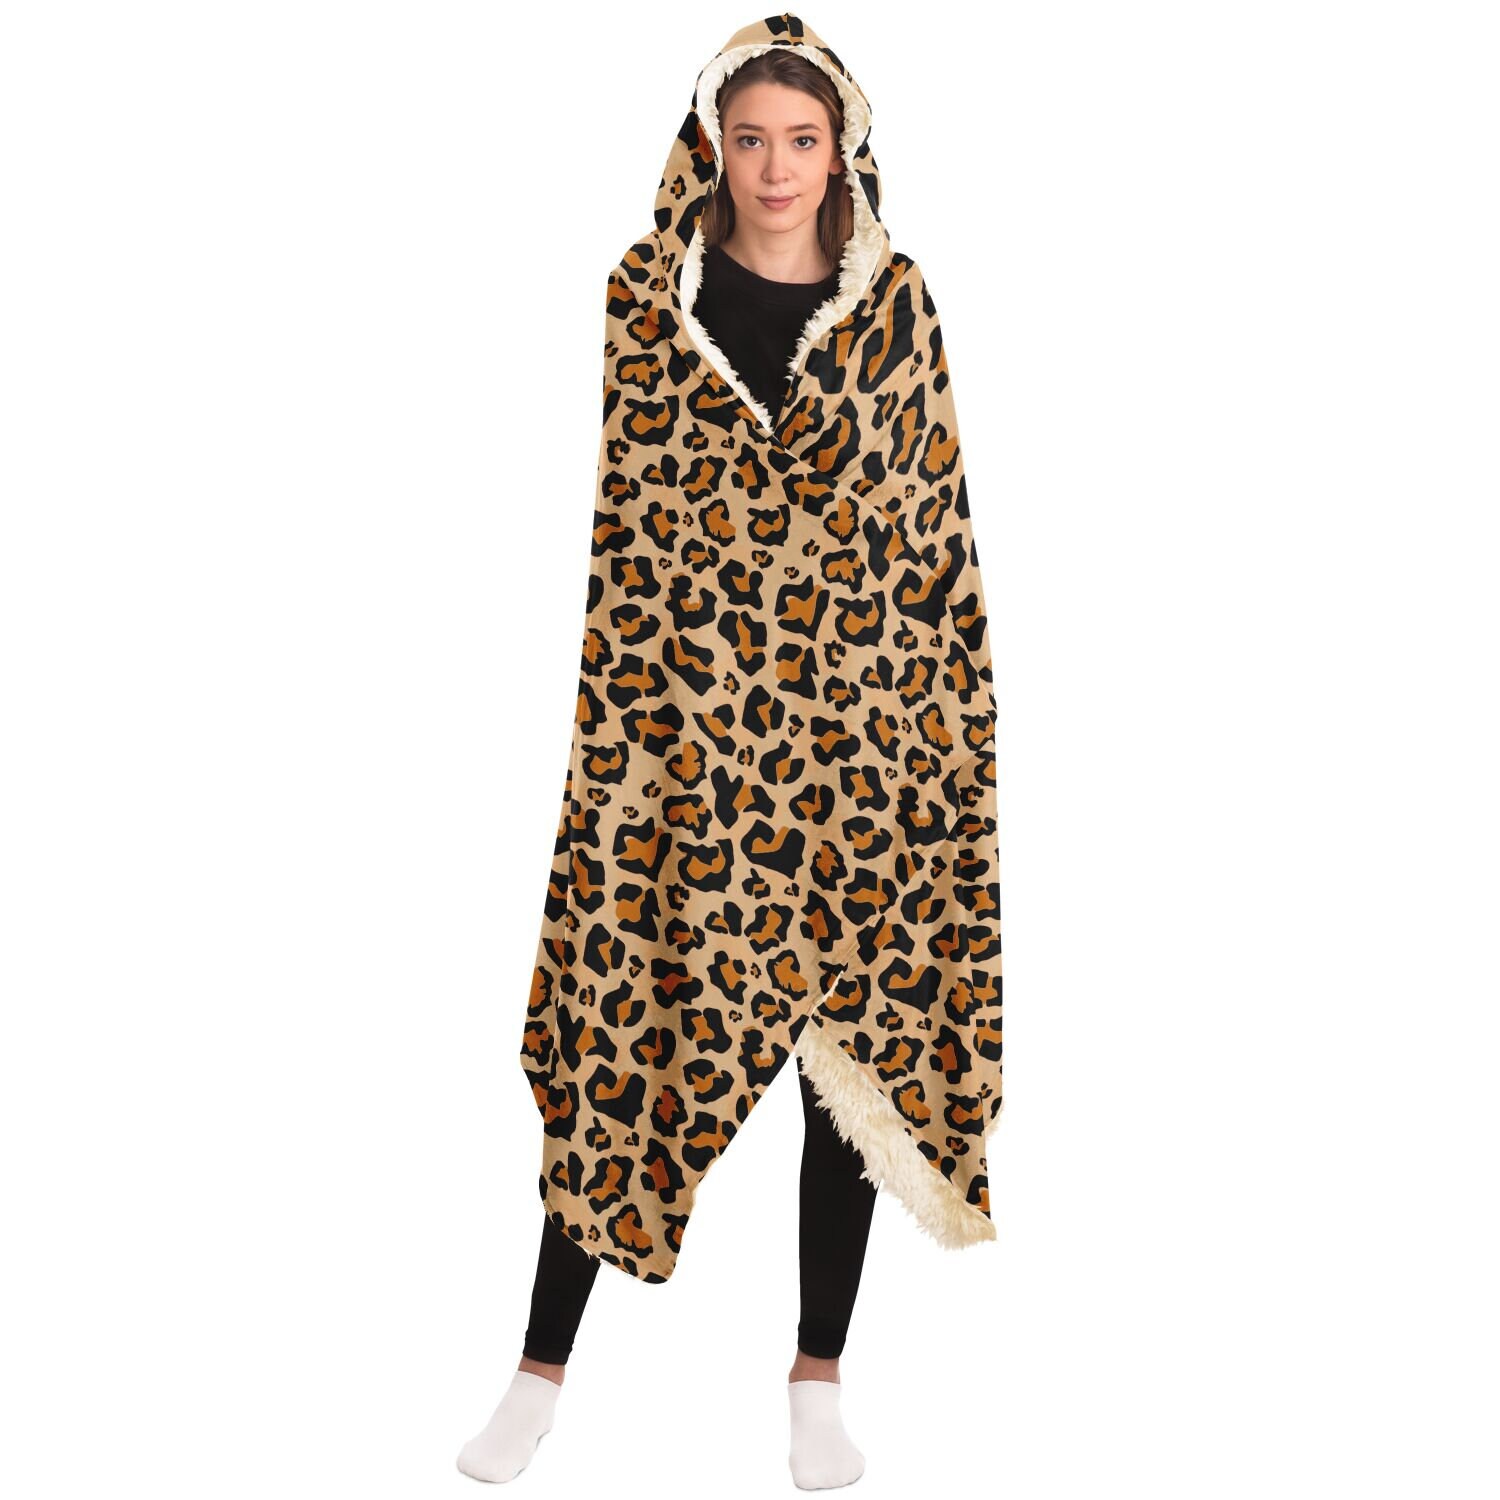 Discover Leopard Hooded Blanket, Animal Print Cheetah Sherpa Fleece Soft Fluffy Cozy Warm Adult Men Women Kids Large Gift